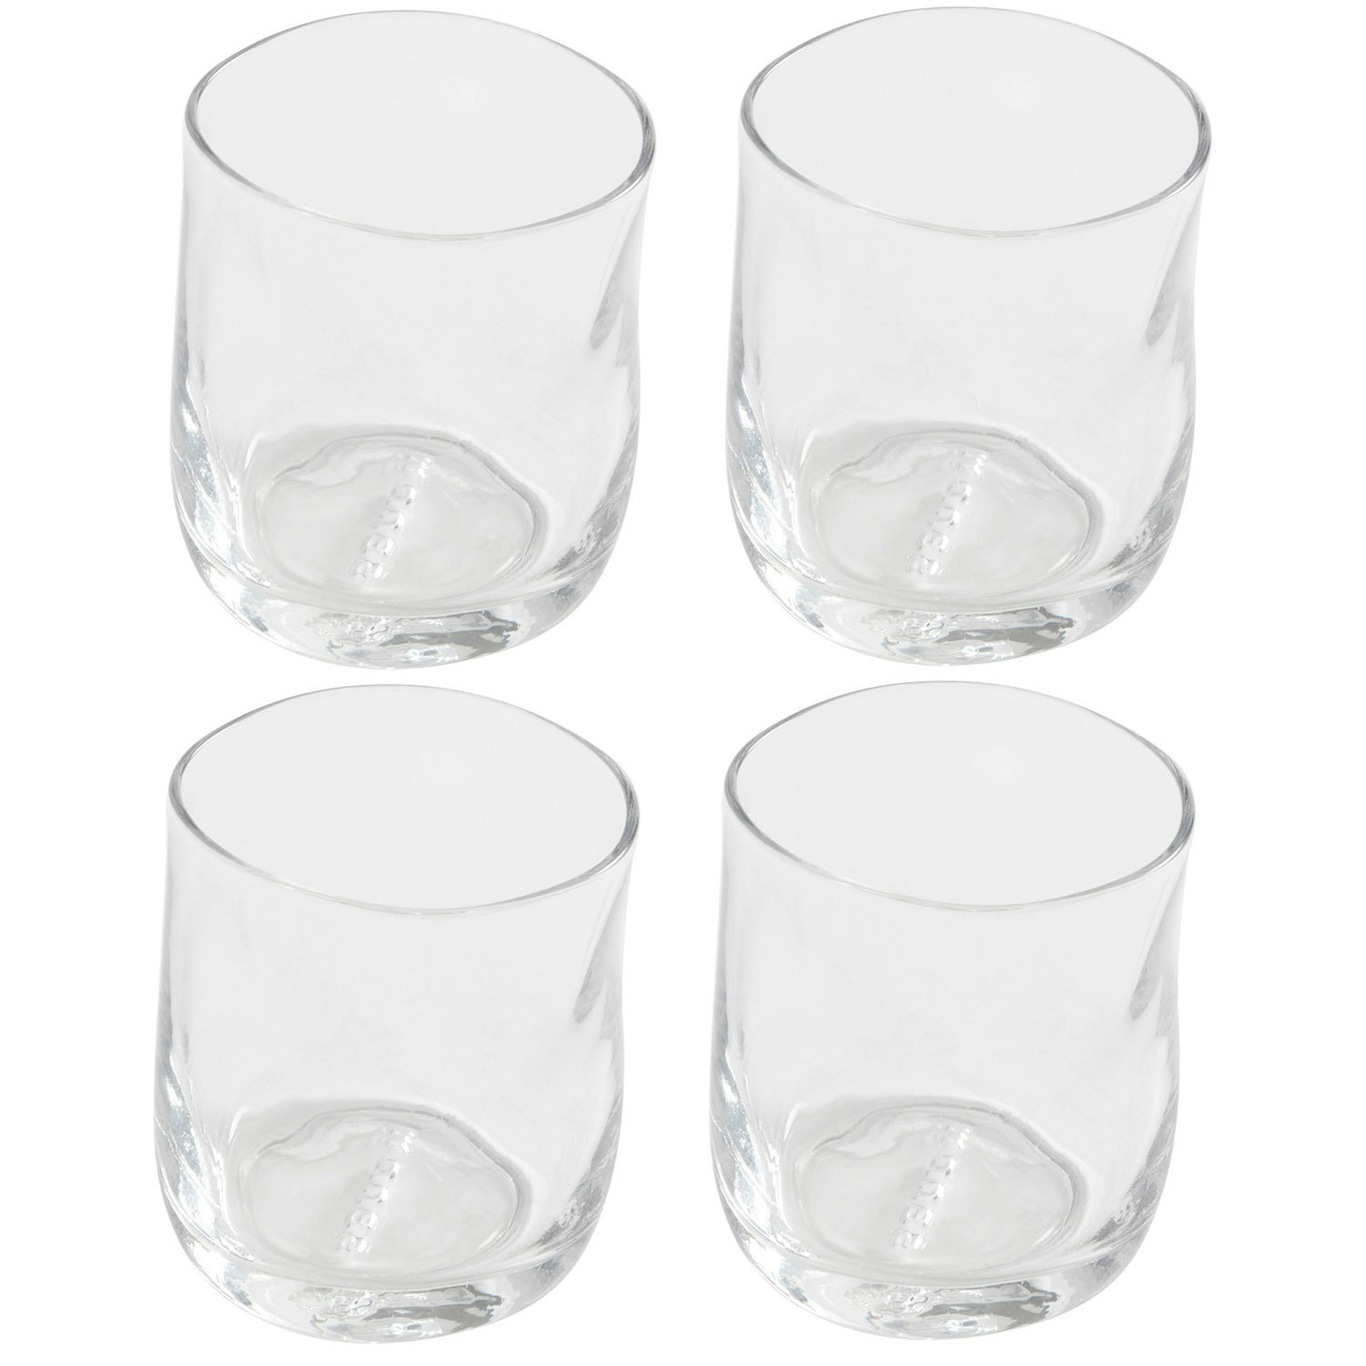 https://royaldesign.com/image/11/muubs-furo-glass-ready-set-of-4-pcs-0?w=800&quality=80